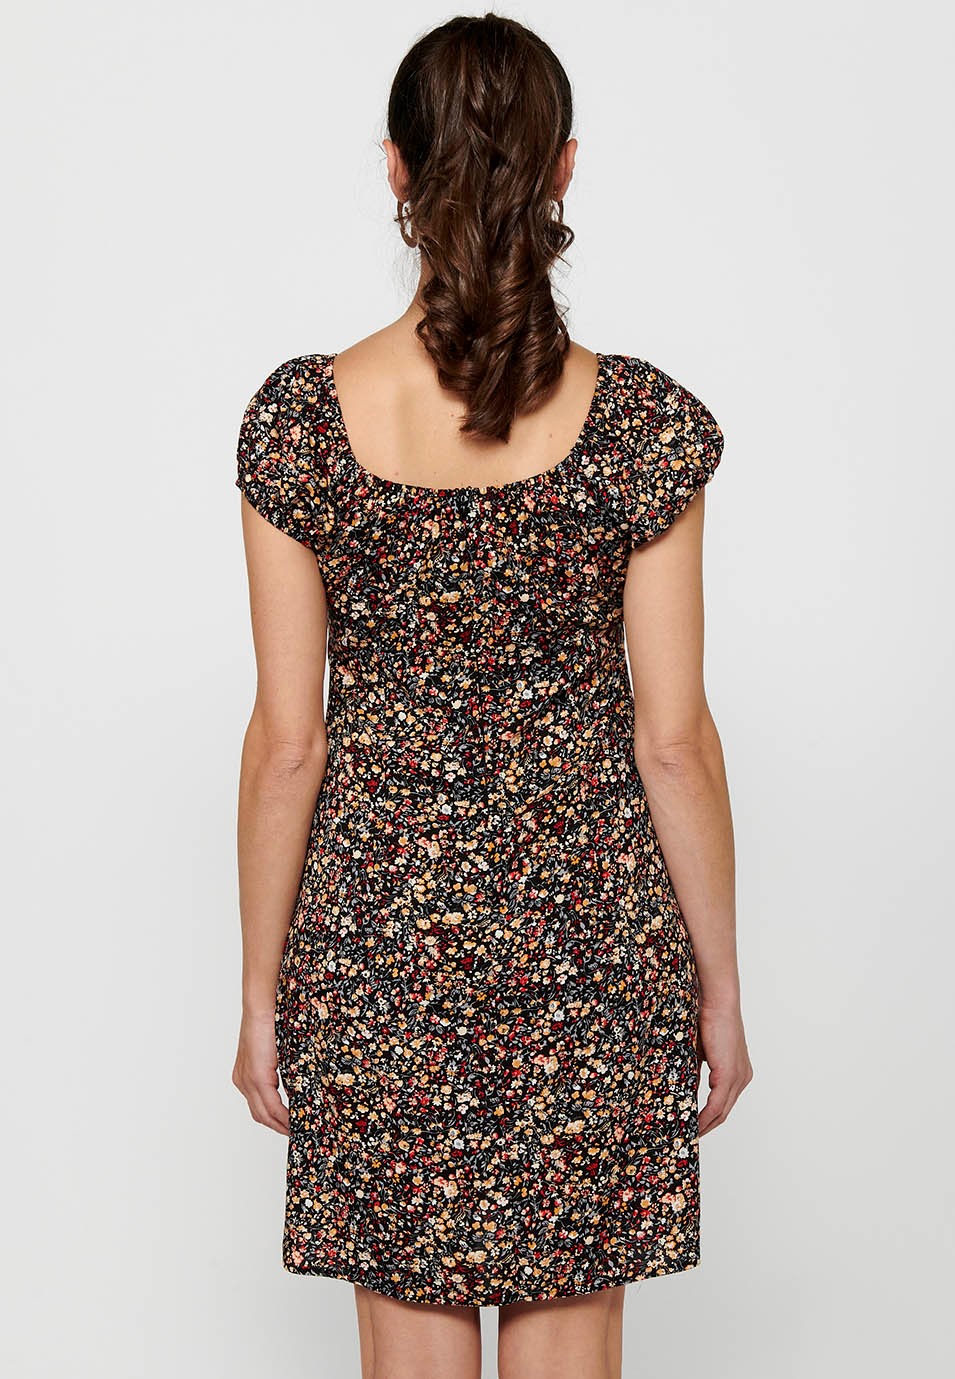 Damen-Kleid mit mehrfarbigem Blumendruck, kurzen Ärmeln, gerafftem Ausschnitt und Reißverschluss hinten 9